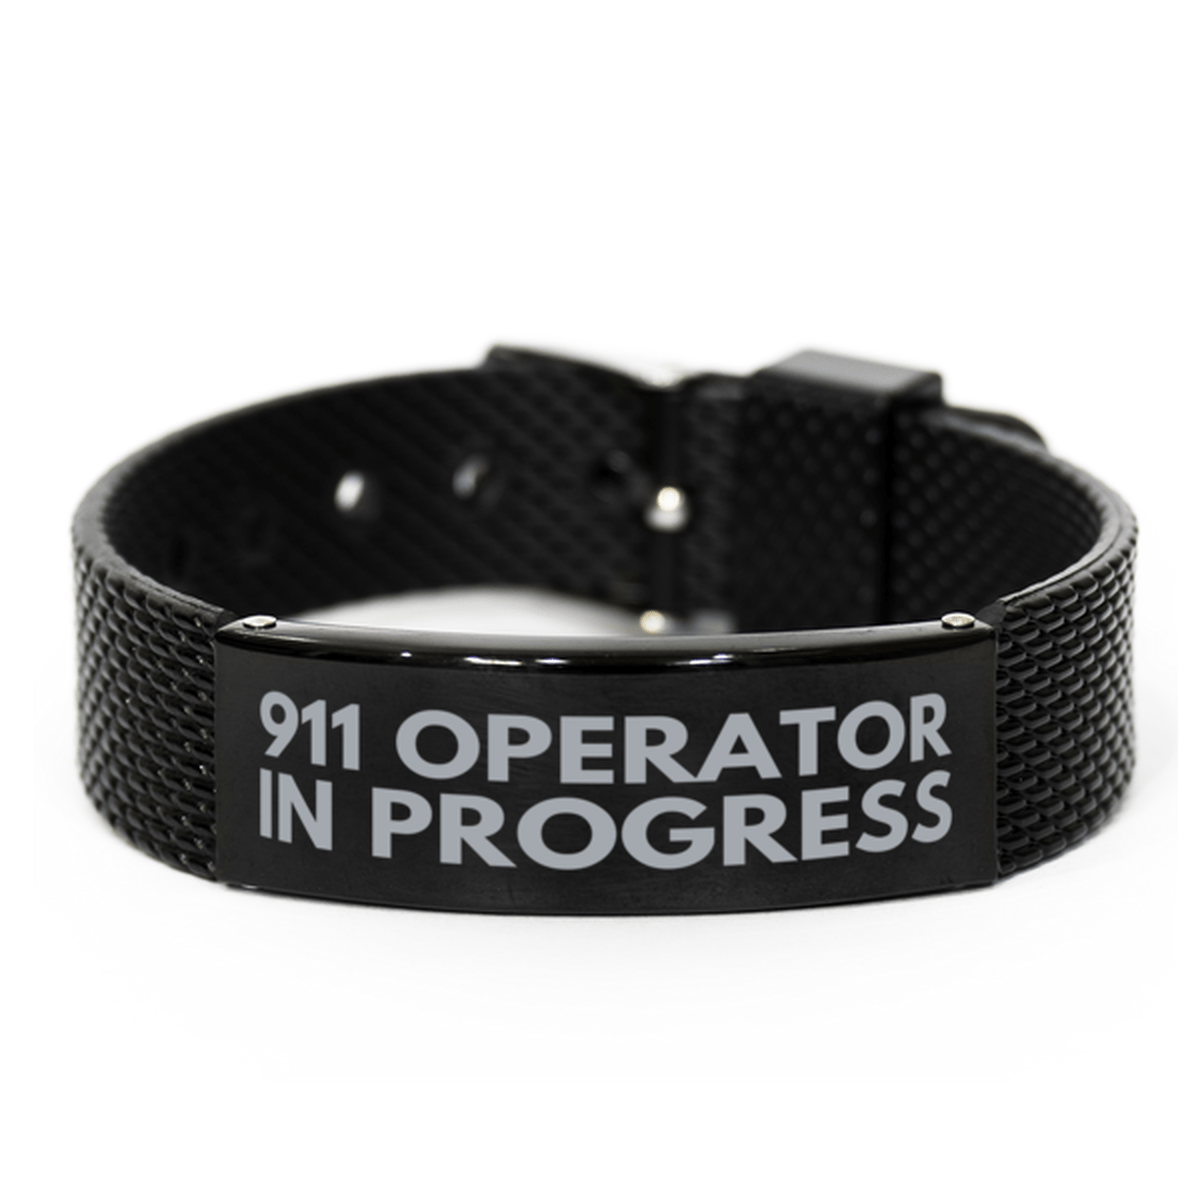 Inspirational 911 Operator Black Shark Mesh Bracelet, 911 Operator In Progress, Best Graduation Gifts for Students